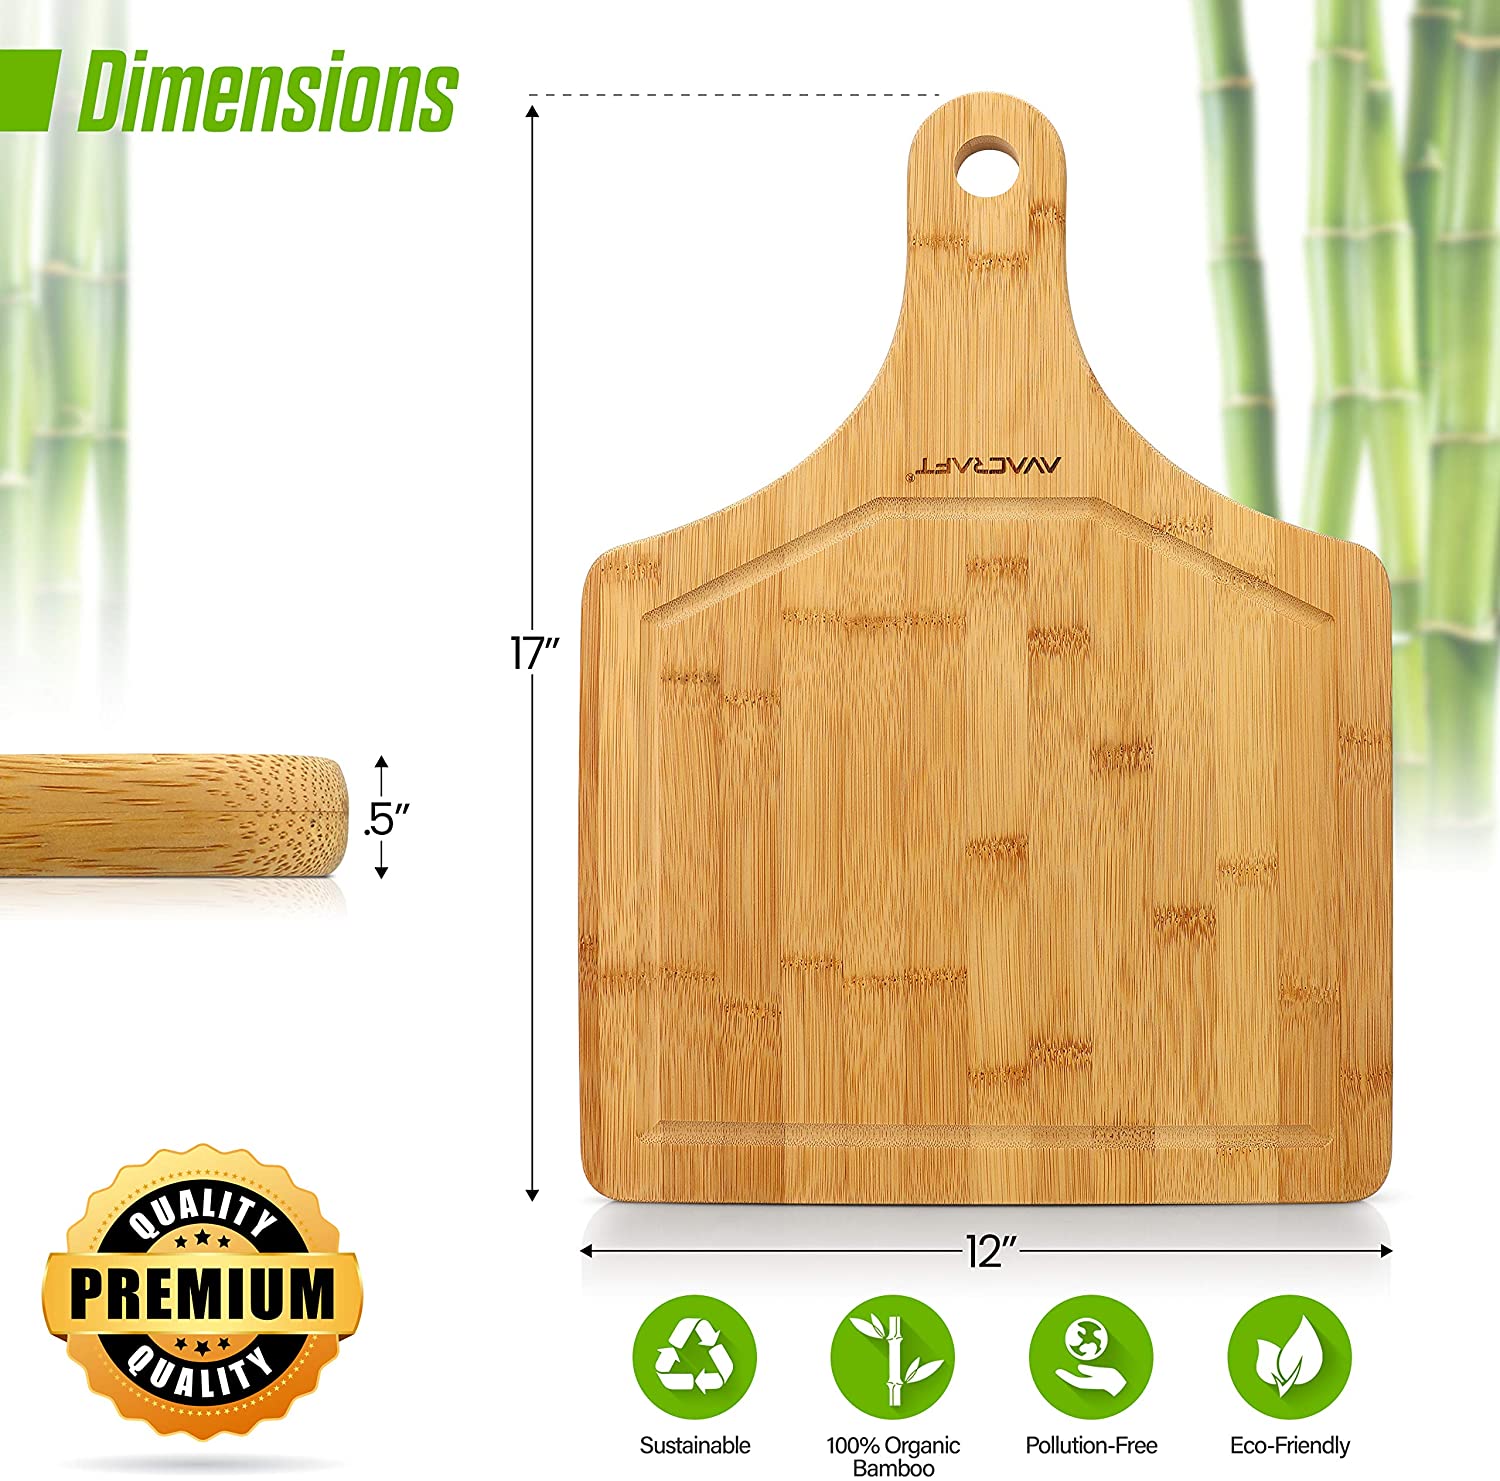 AVACRAFT Large Organic Bamboo Cutting Board, Large Cutting Board for k